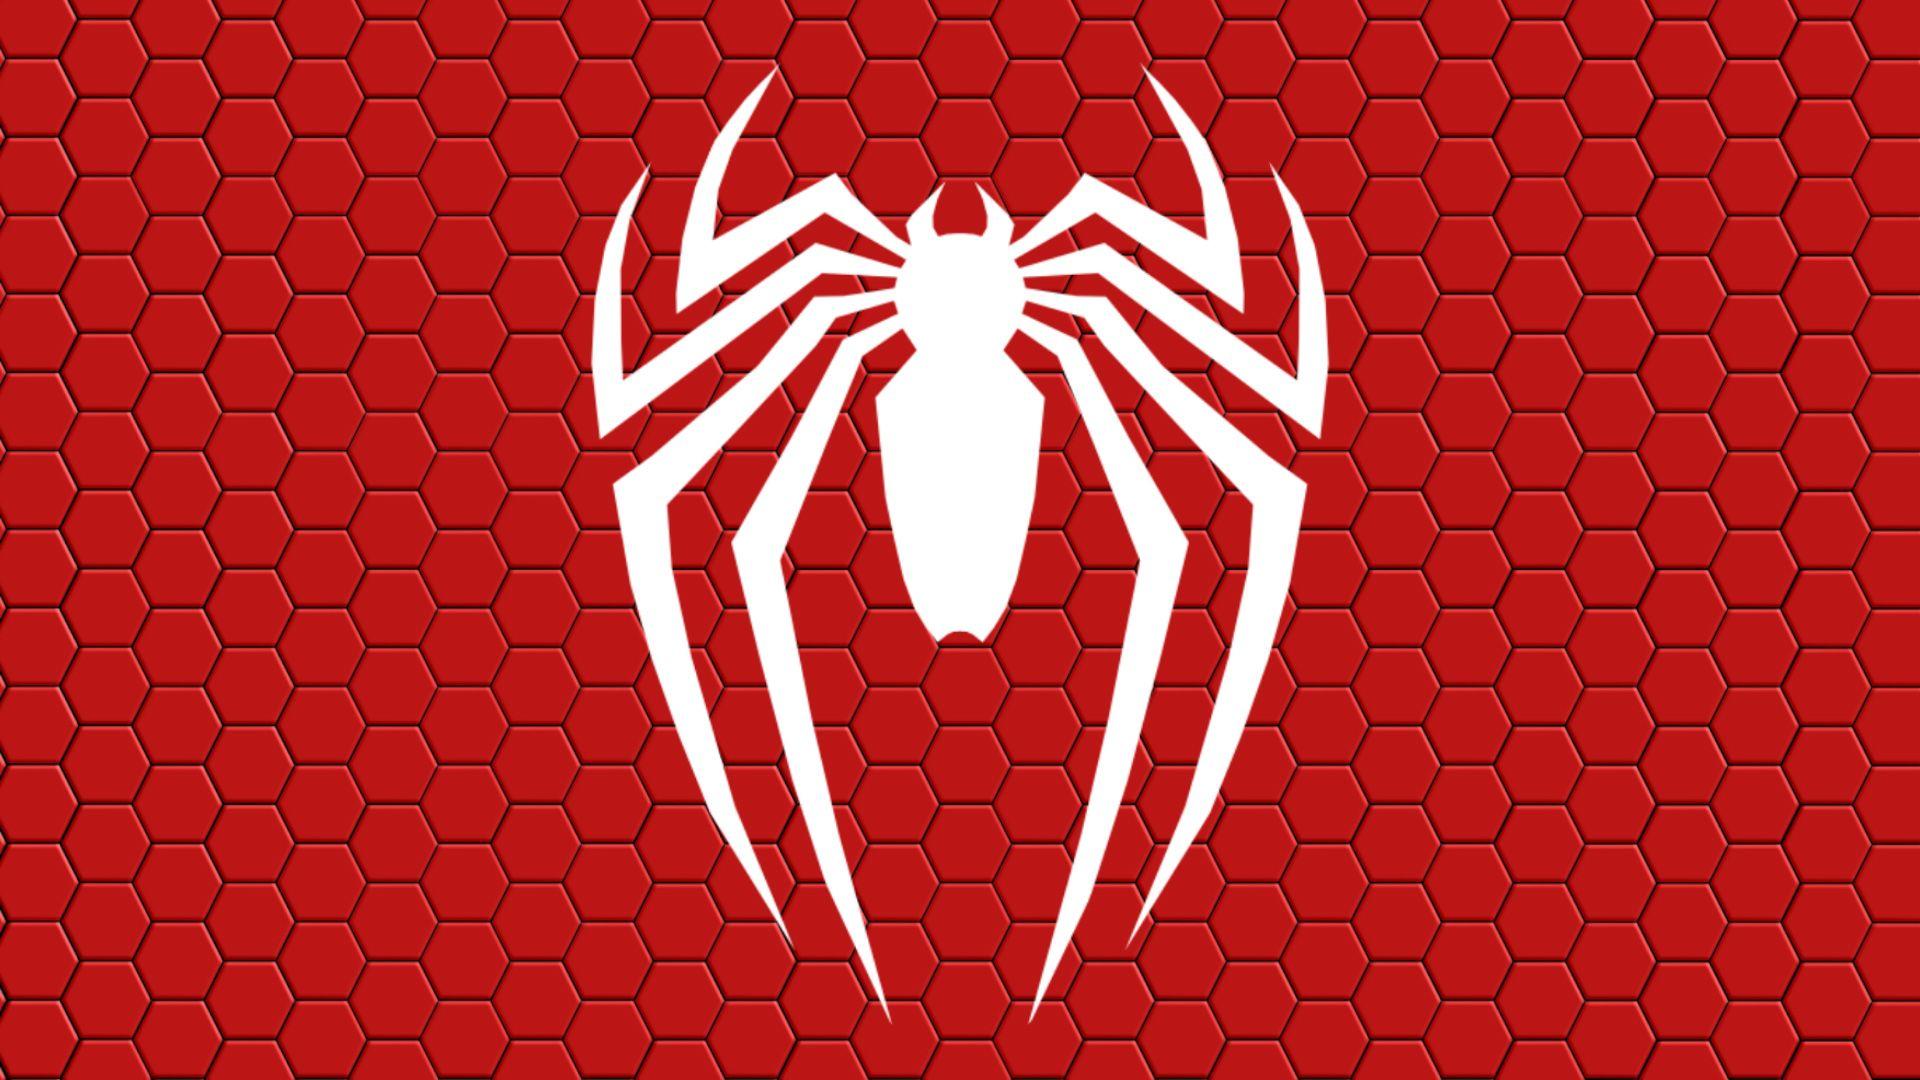 Spider Man PS4 Logo Wallpaper Free Spider Man PS4 Logo